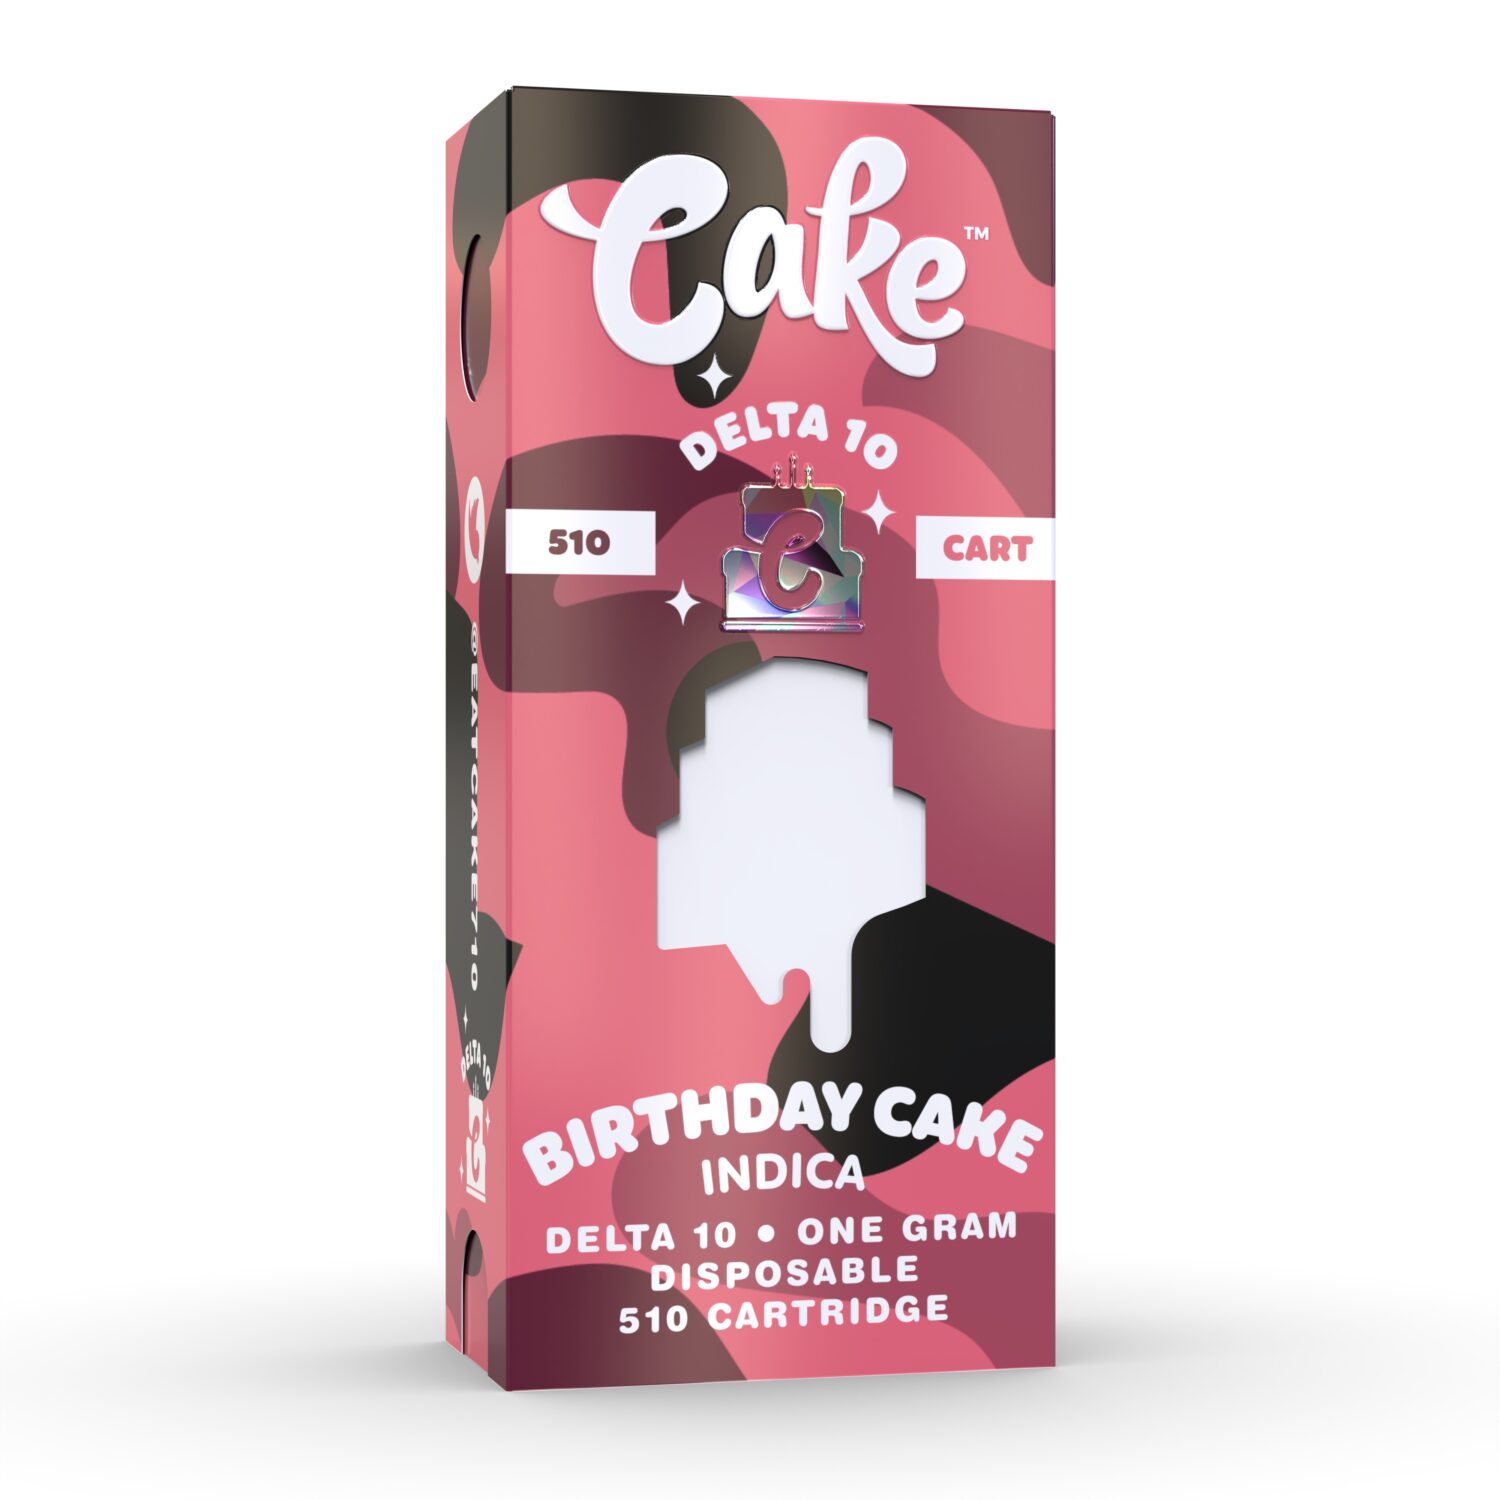 Cake-Delta-10-Cartridge-birthday-cake-2-scaled-1.jpg